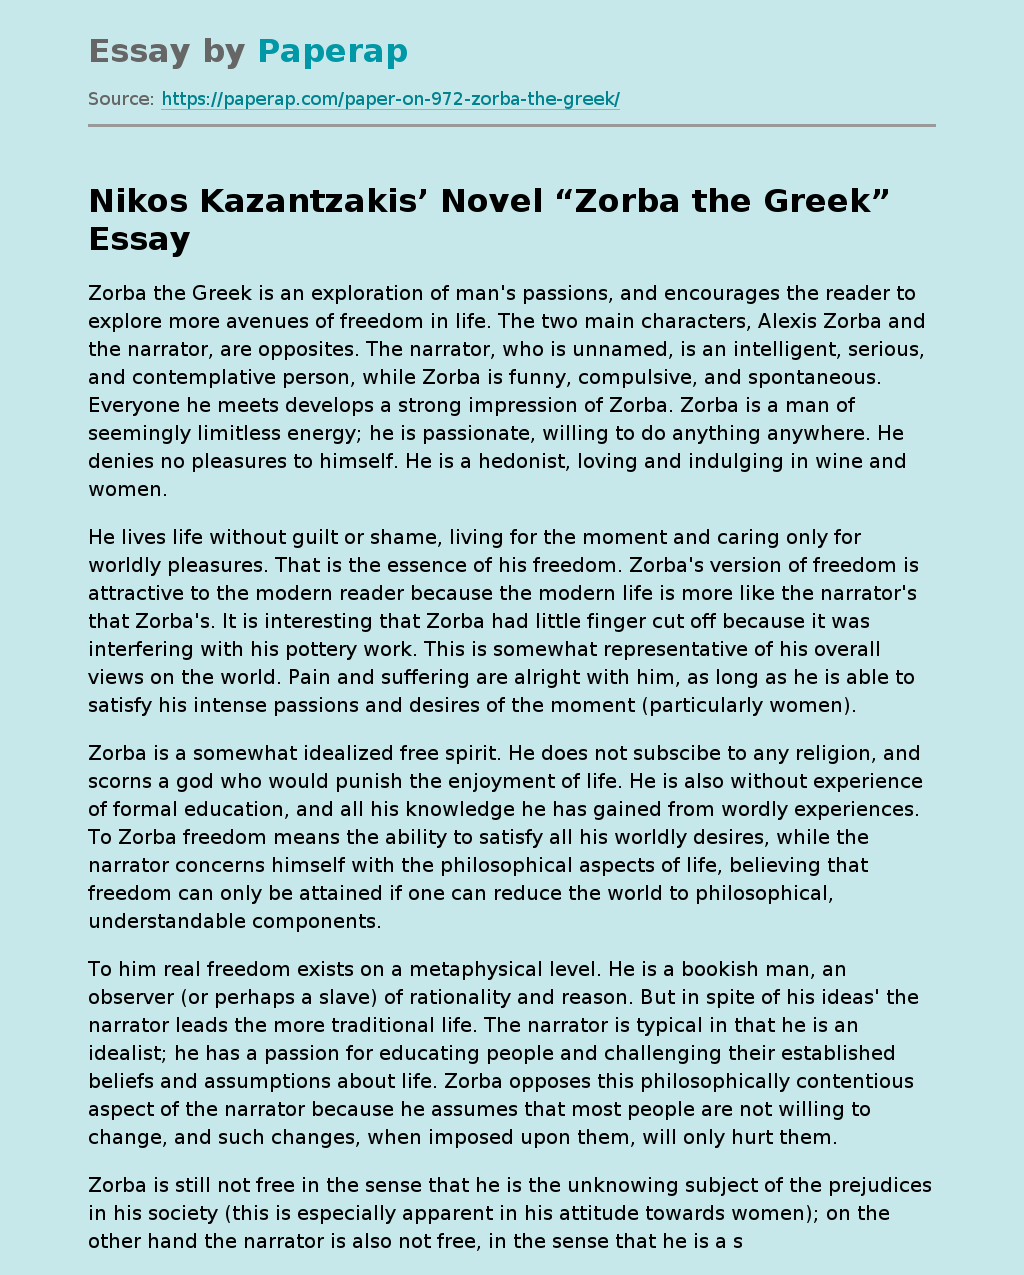 Nikos Kazantzakis’ Novel “Zorba the Greek”